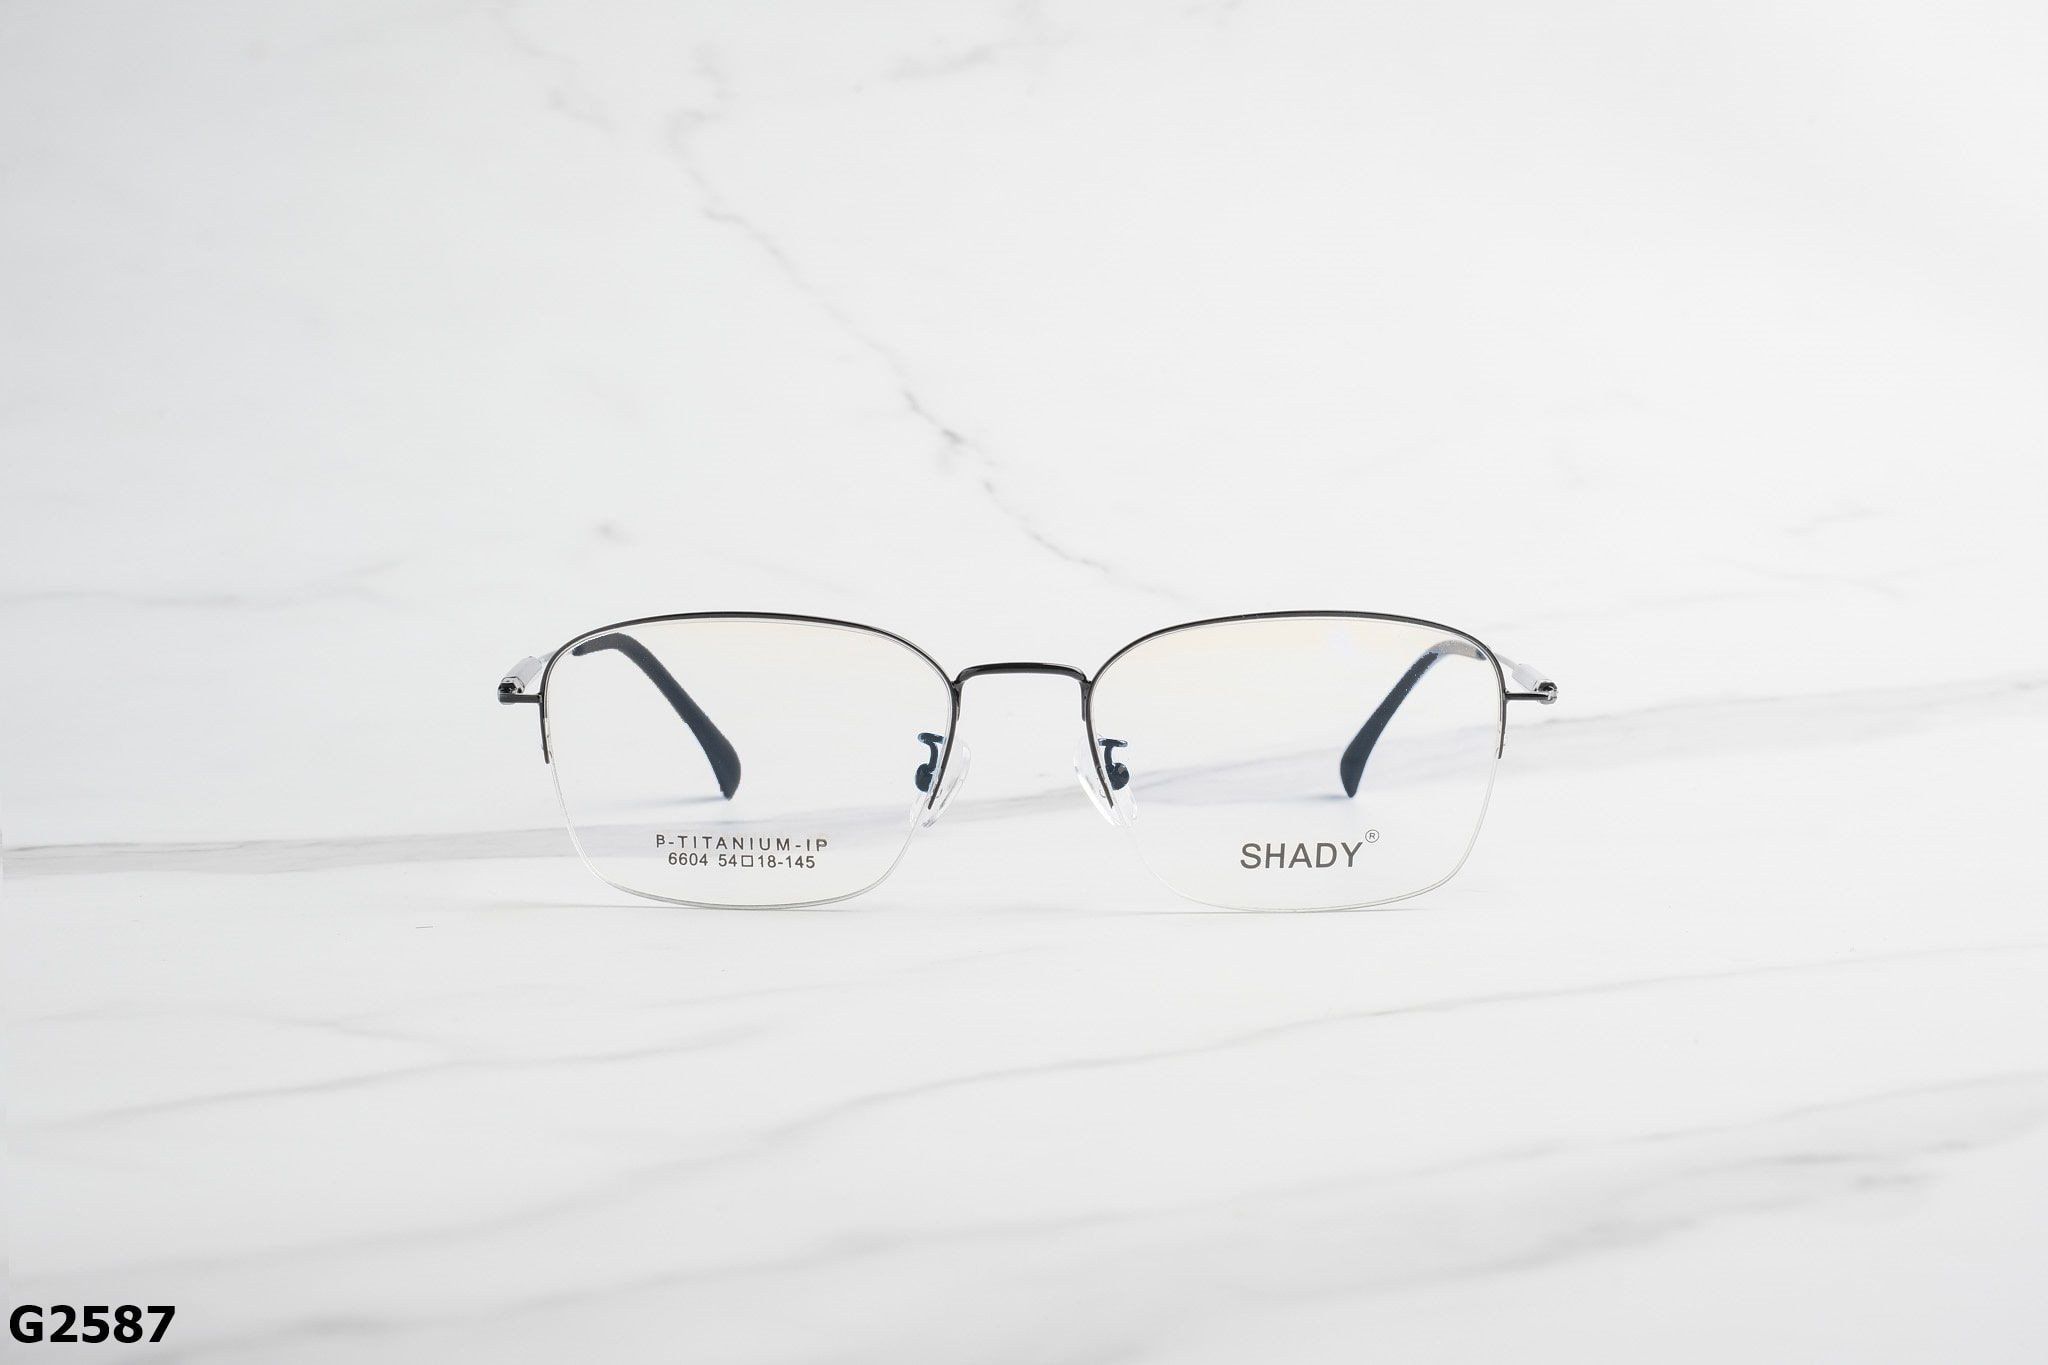  SHADY Eyewear - Glasses - G2587 